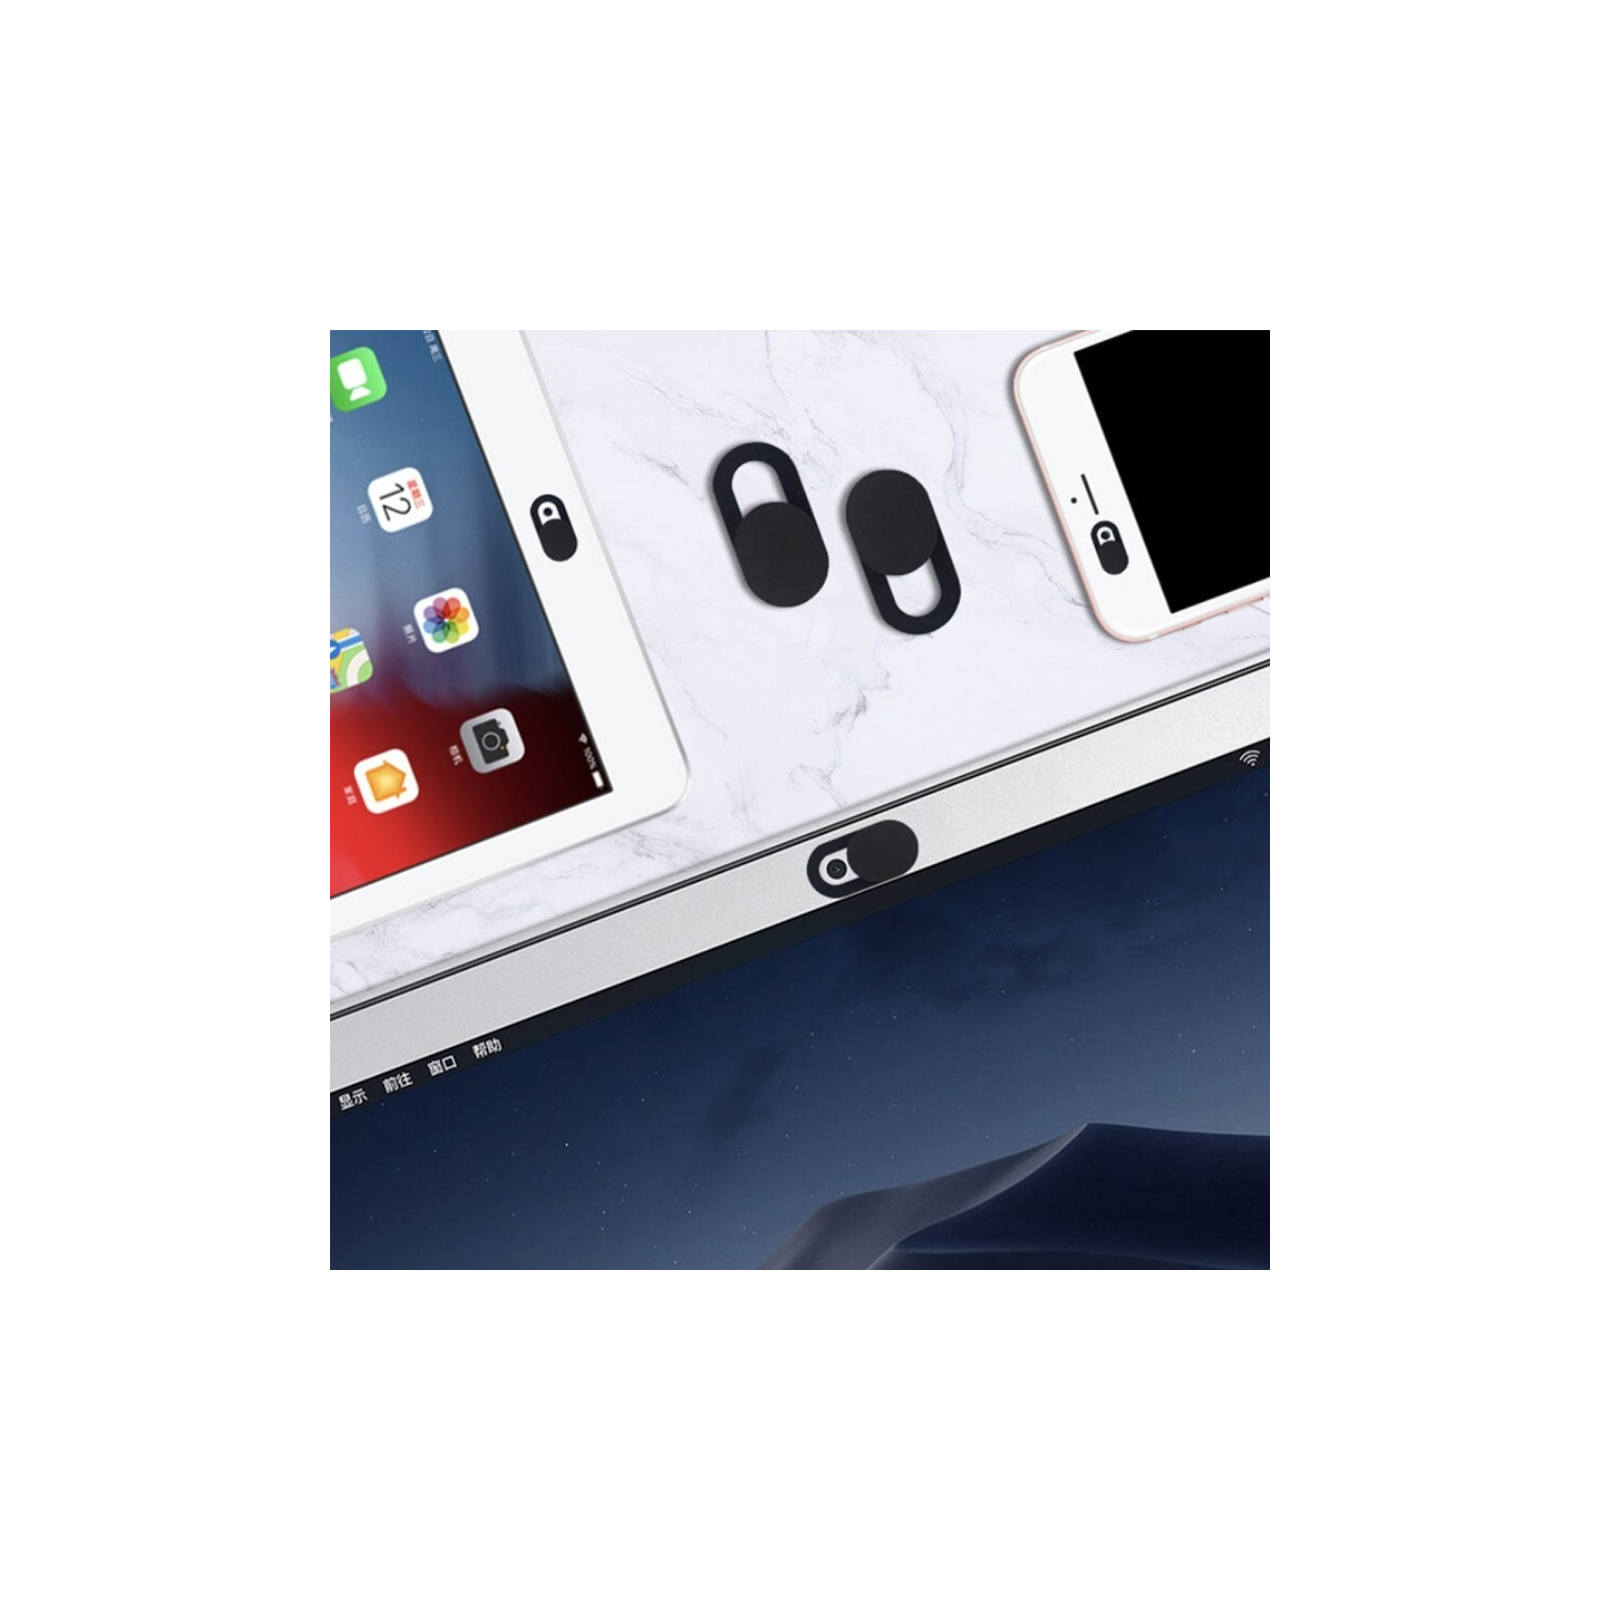 Захисна шторка для веб-камери ноутбука, телефона (наклейка) SampleZone (SZ-001) зображення 4